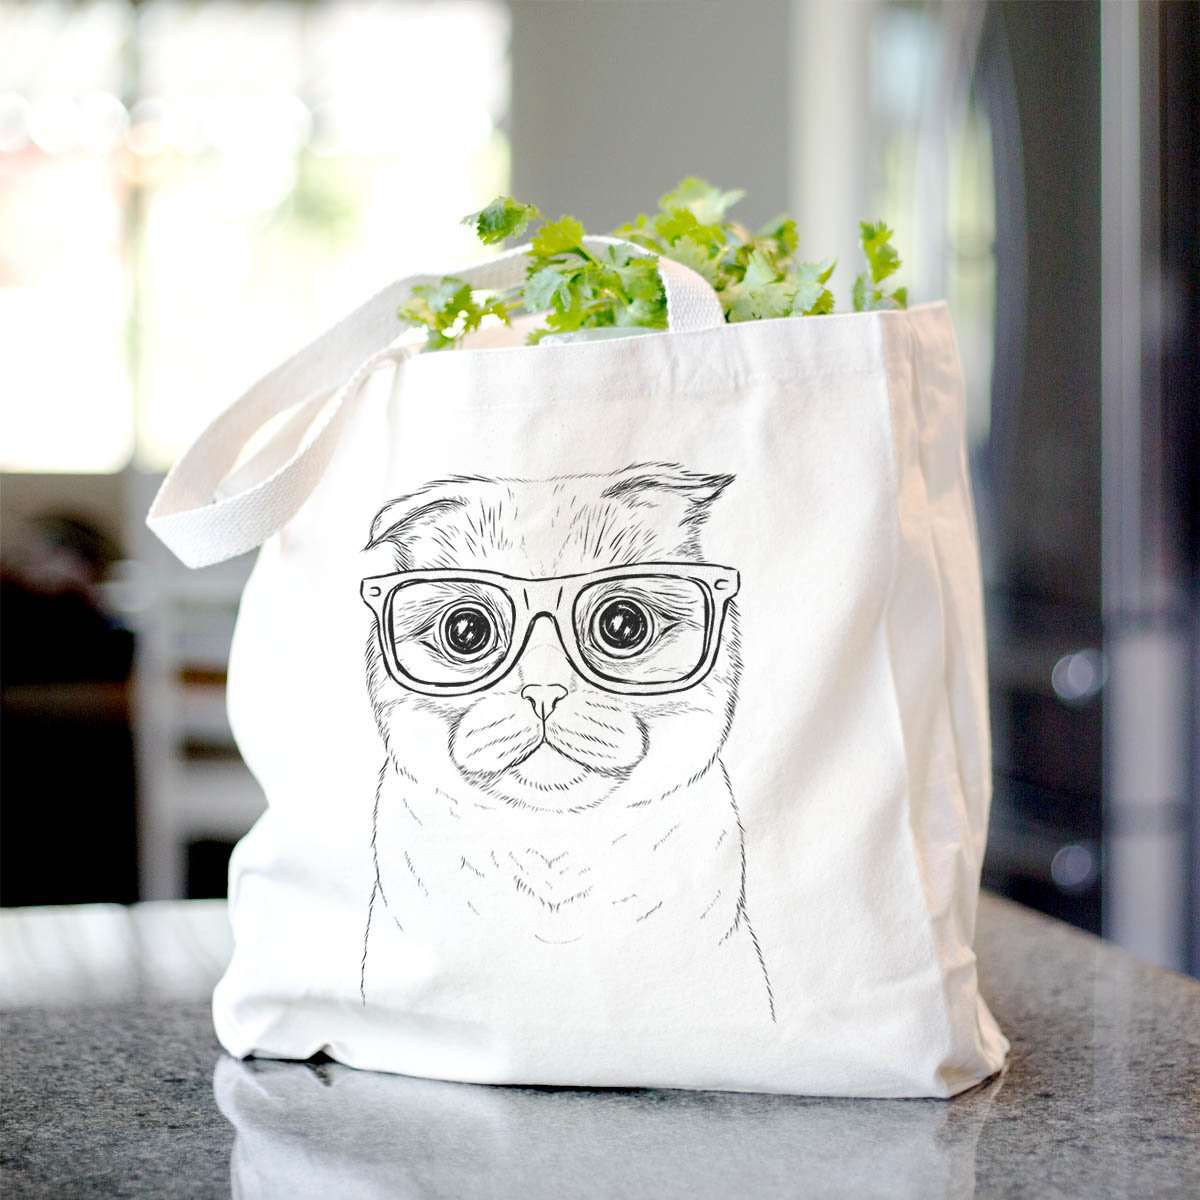 Neko the Scottish Fold Cat - Tote Bag